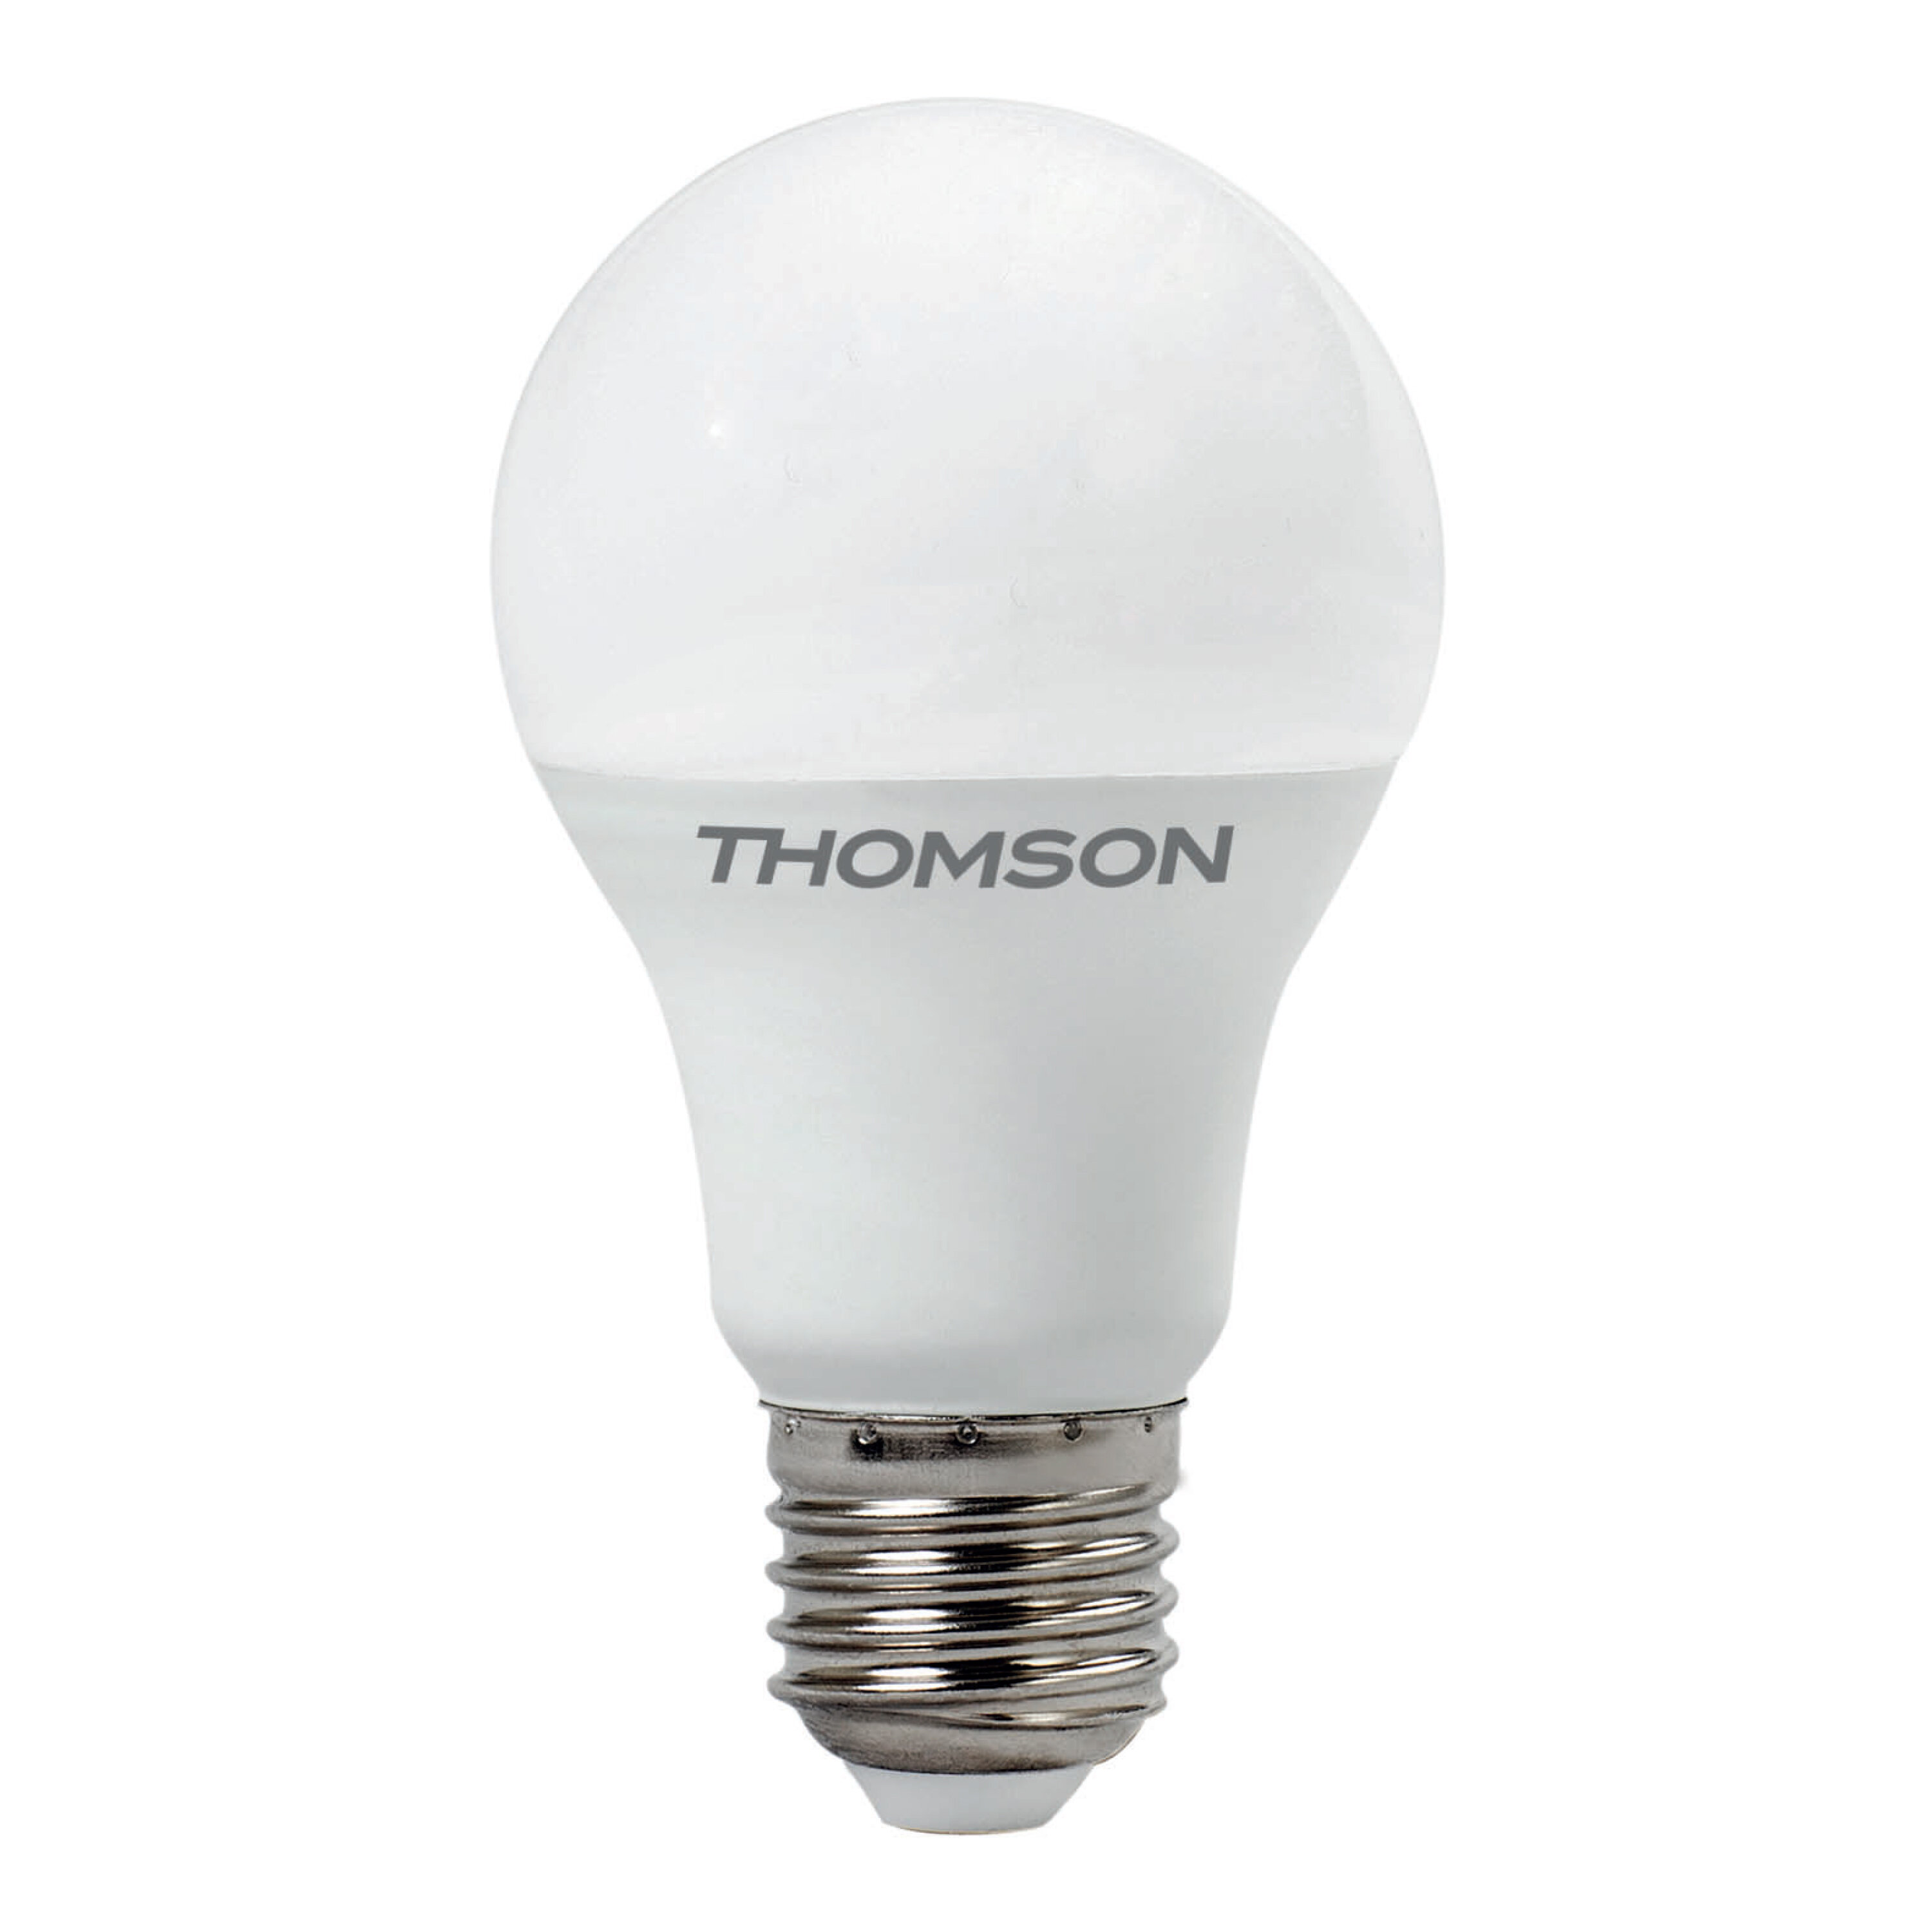 THOMSON LED A60 15W 1200Lm E27 3000K